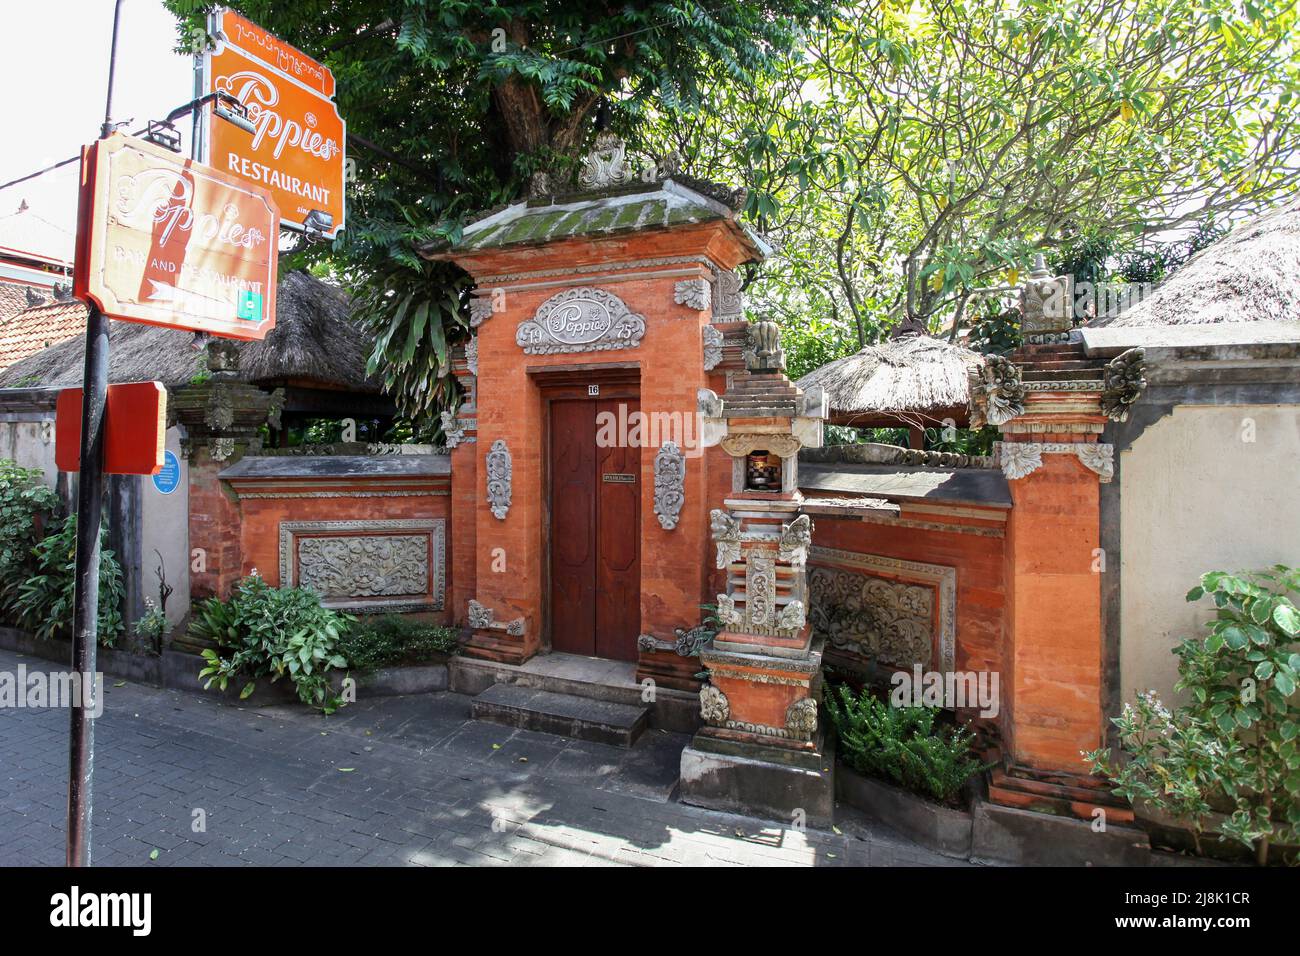 Entrance to Poppies Restaurant in Poppies Lane 1, Kuta, Bali, Indonesia. Stock Photo